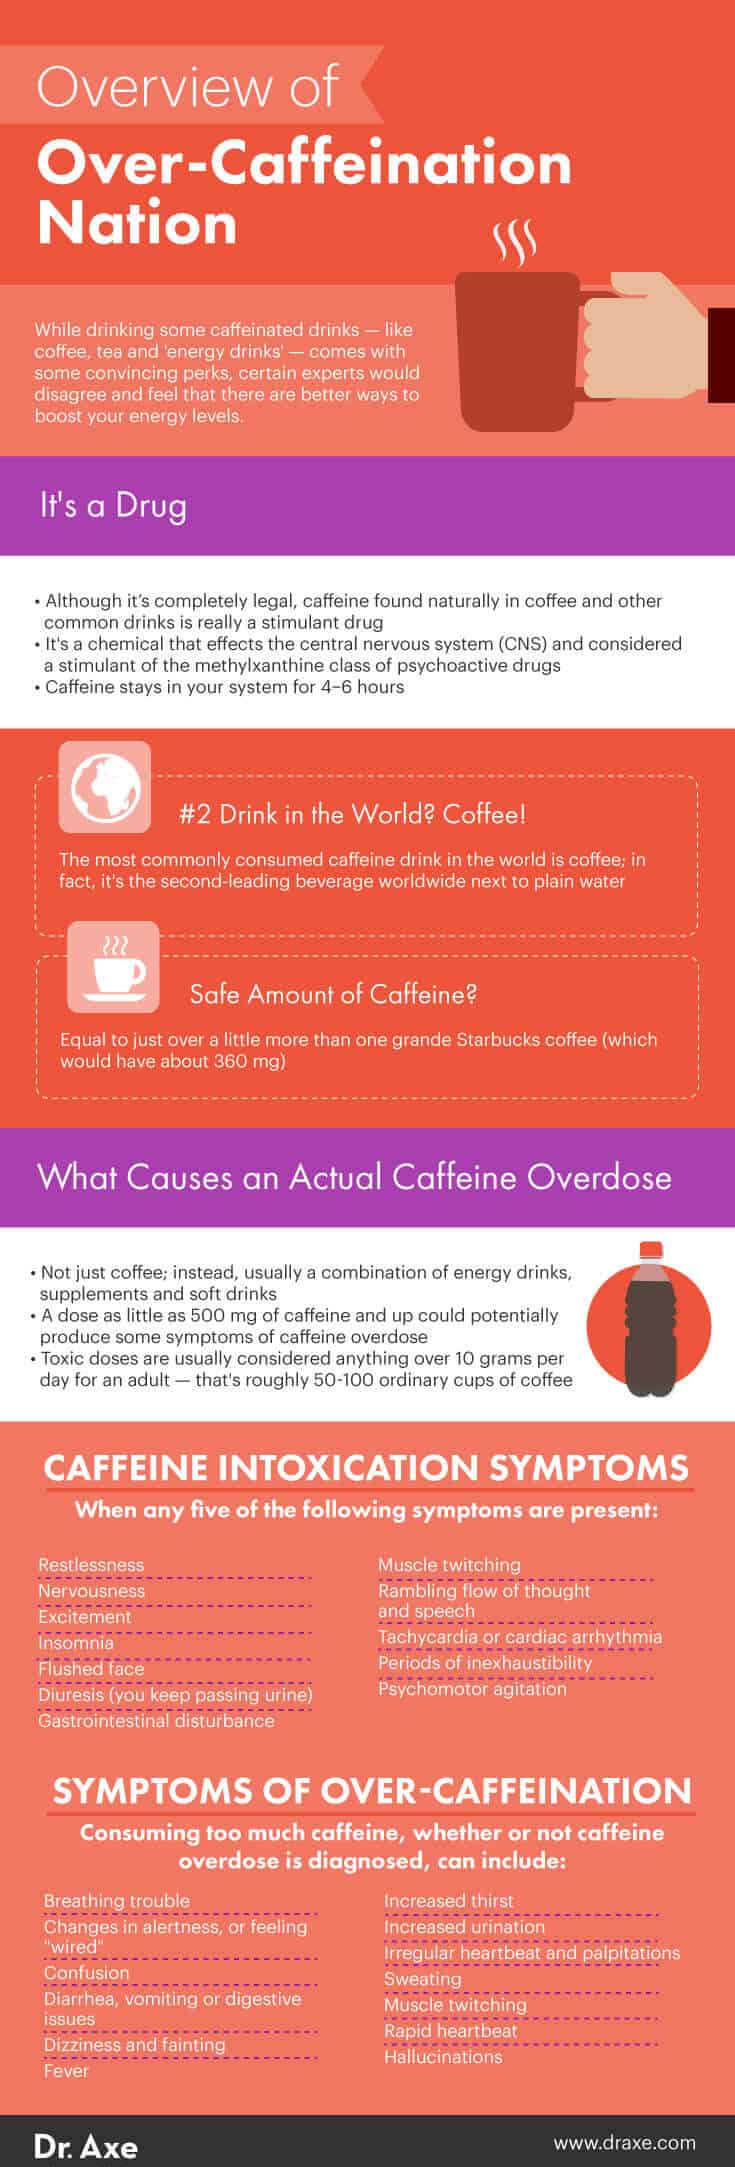 Caffeine overdose infographic - Dr. Axe